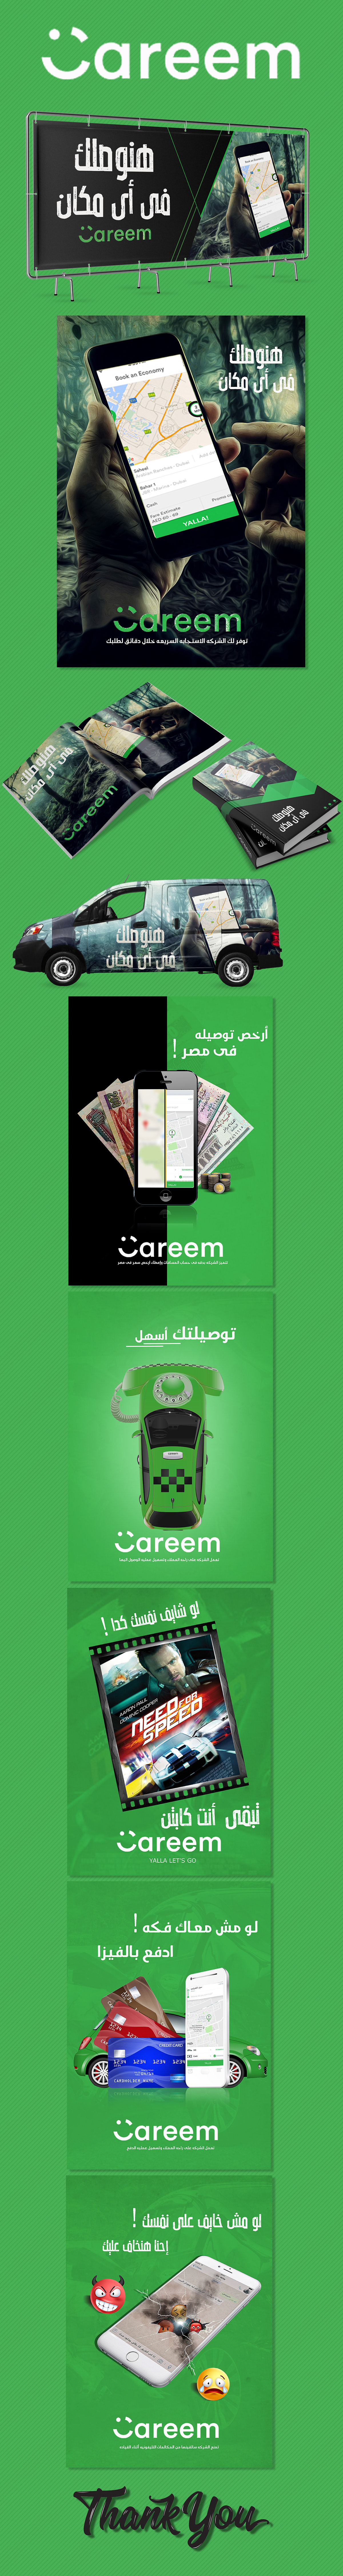 app application social media CAR SERVICE Careem Uber service